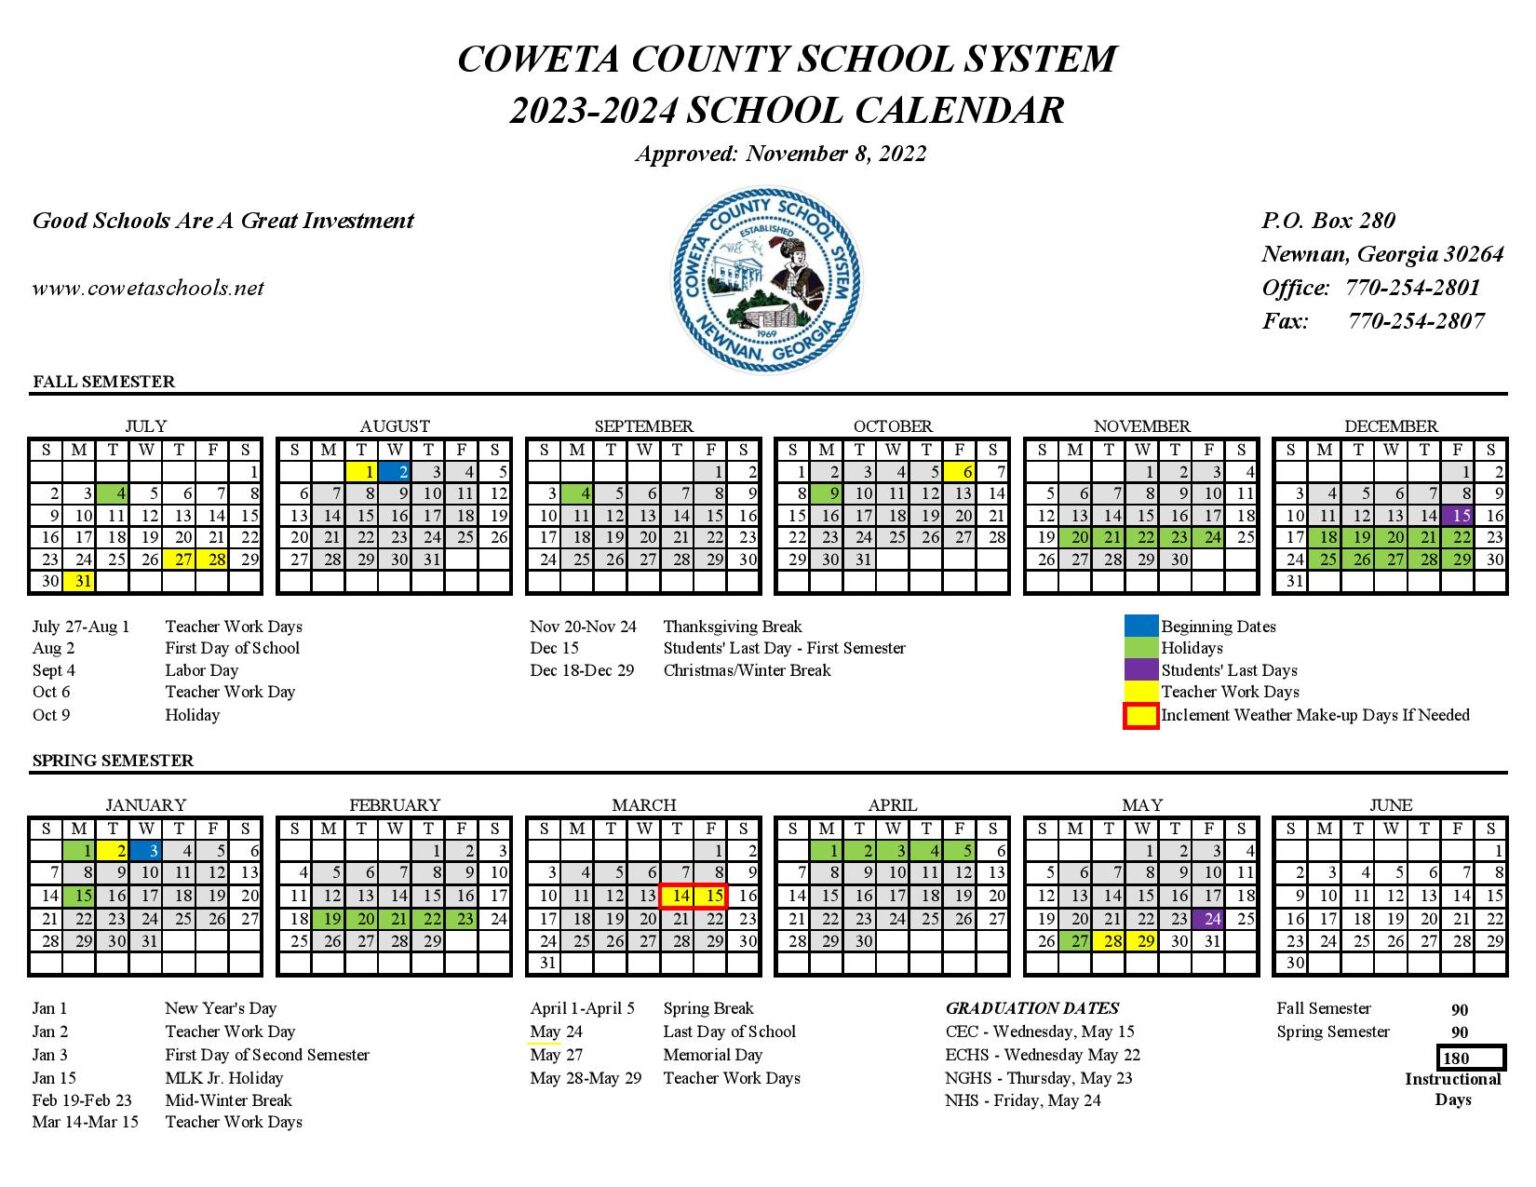 Coweta County Schools Calendar 20232024 in PDF